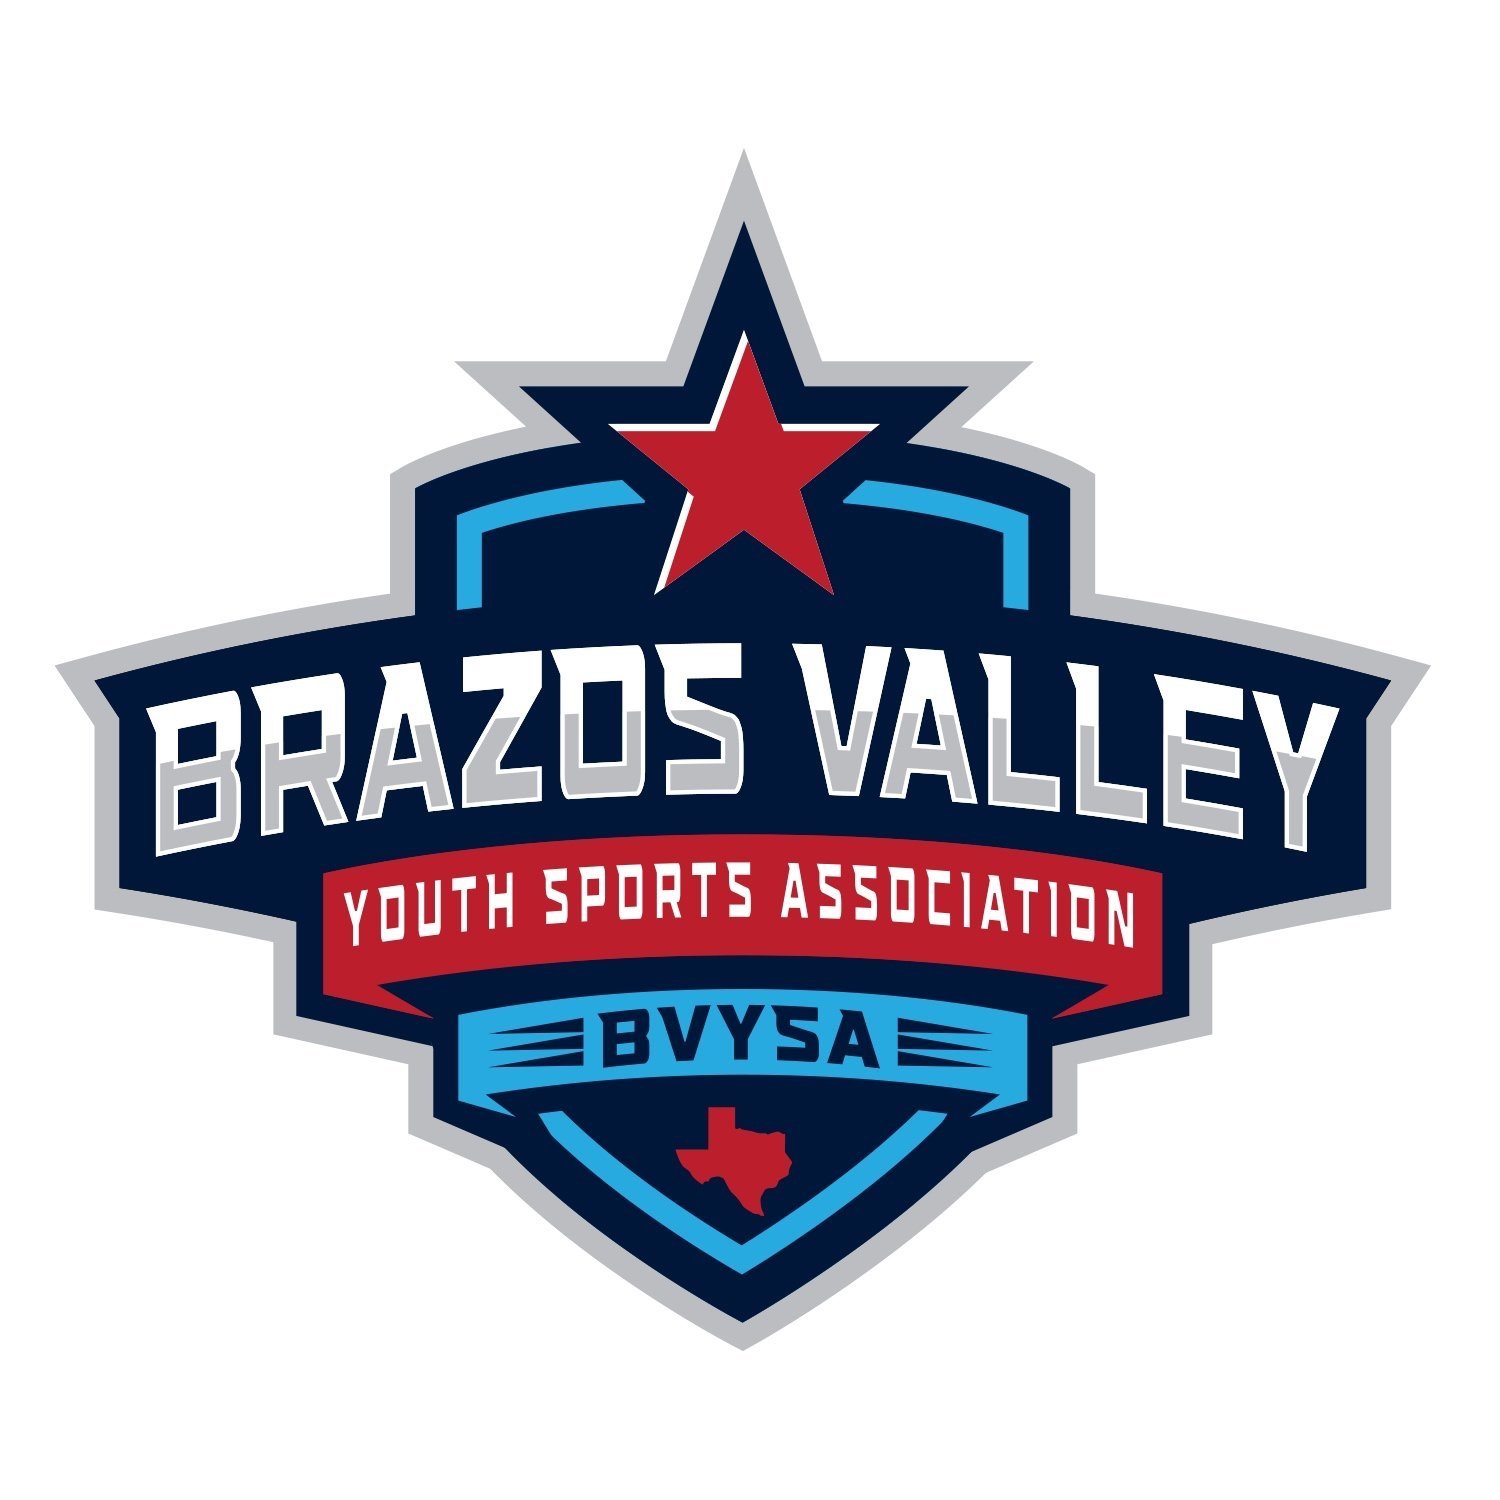 Brazos Valley Youth Sports Association